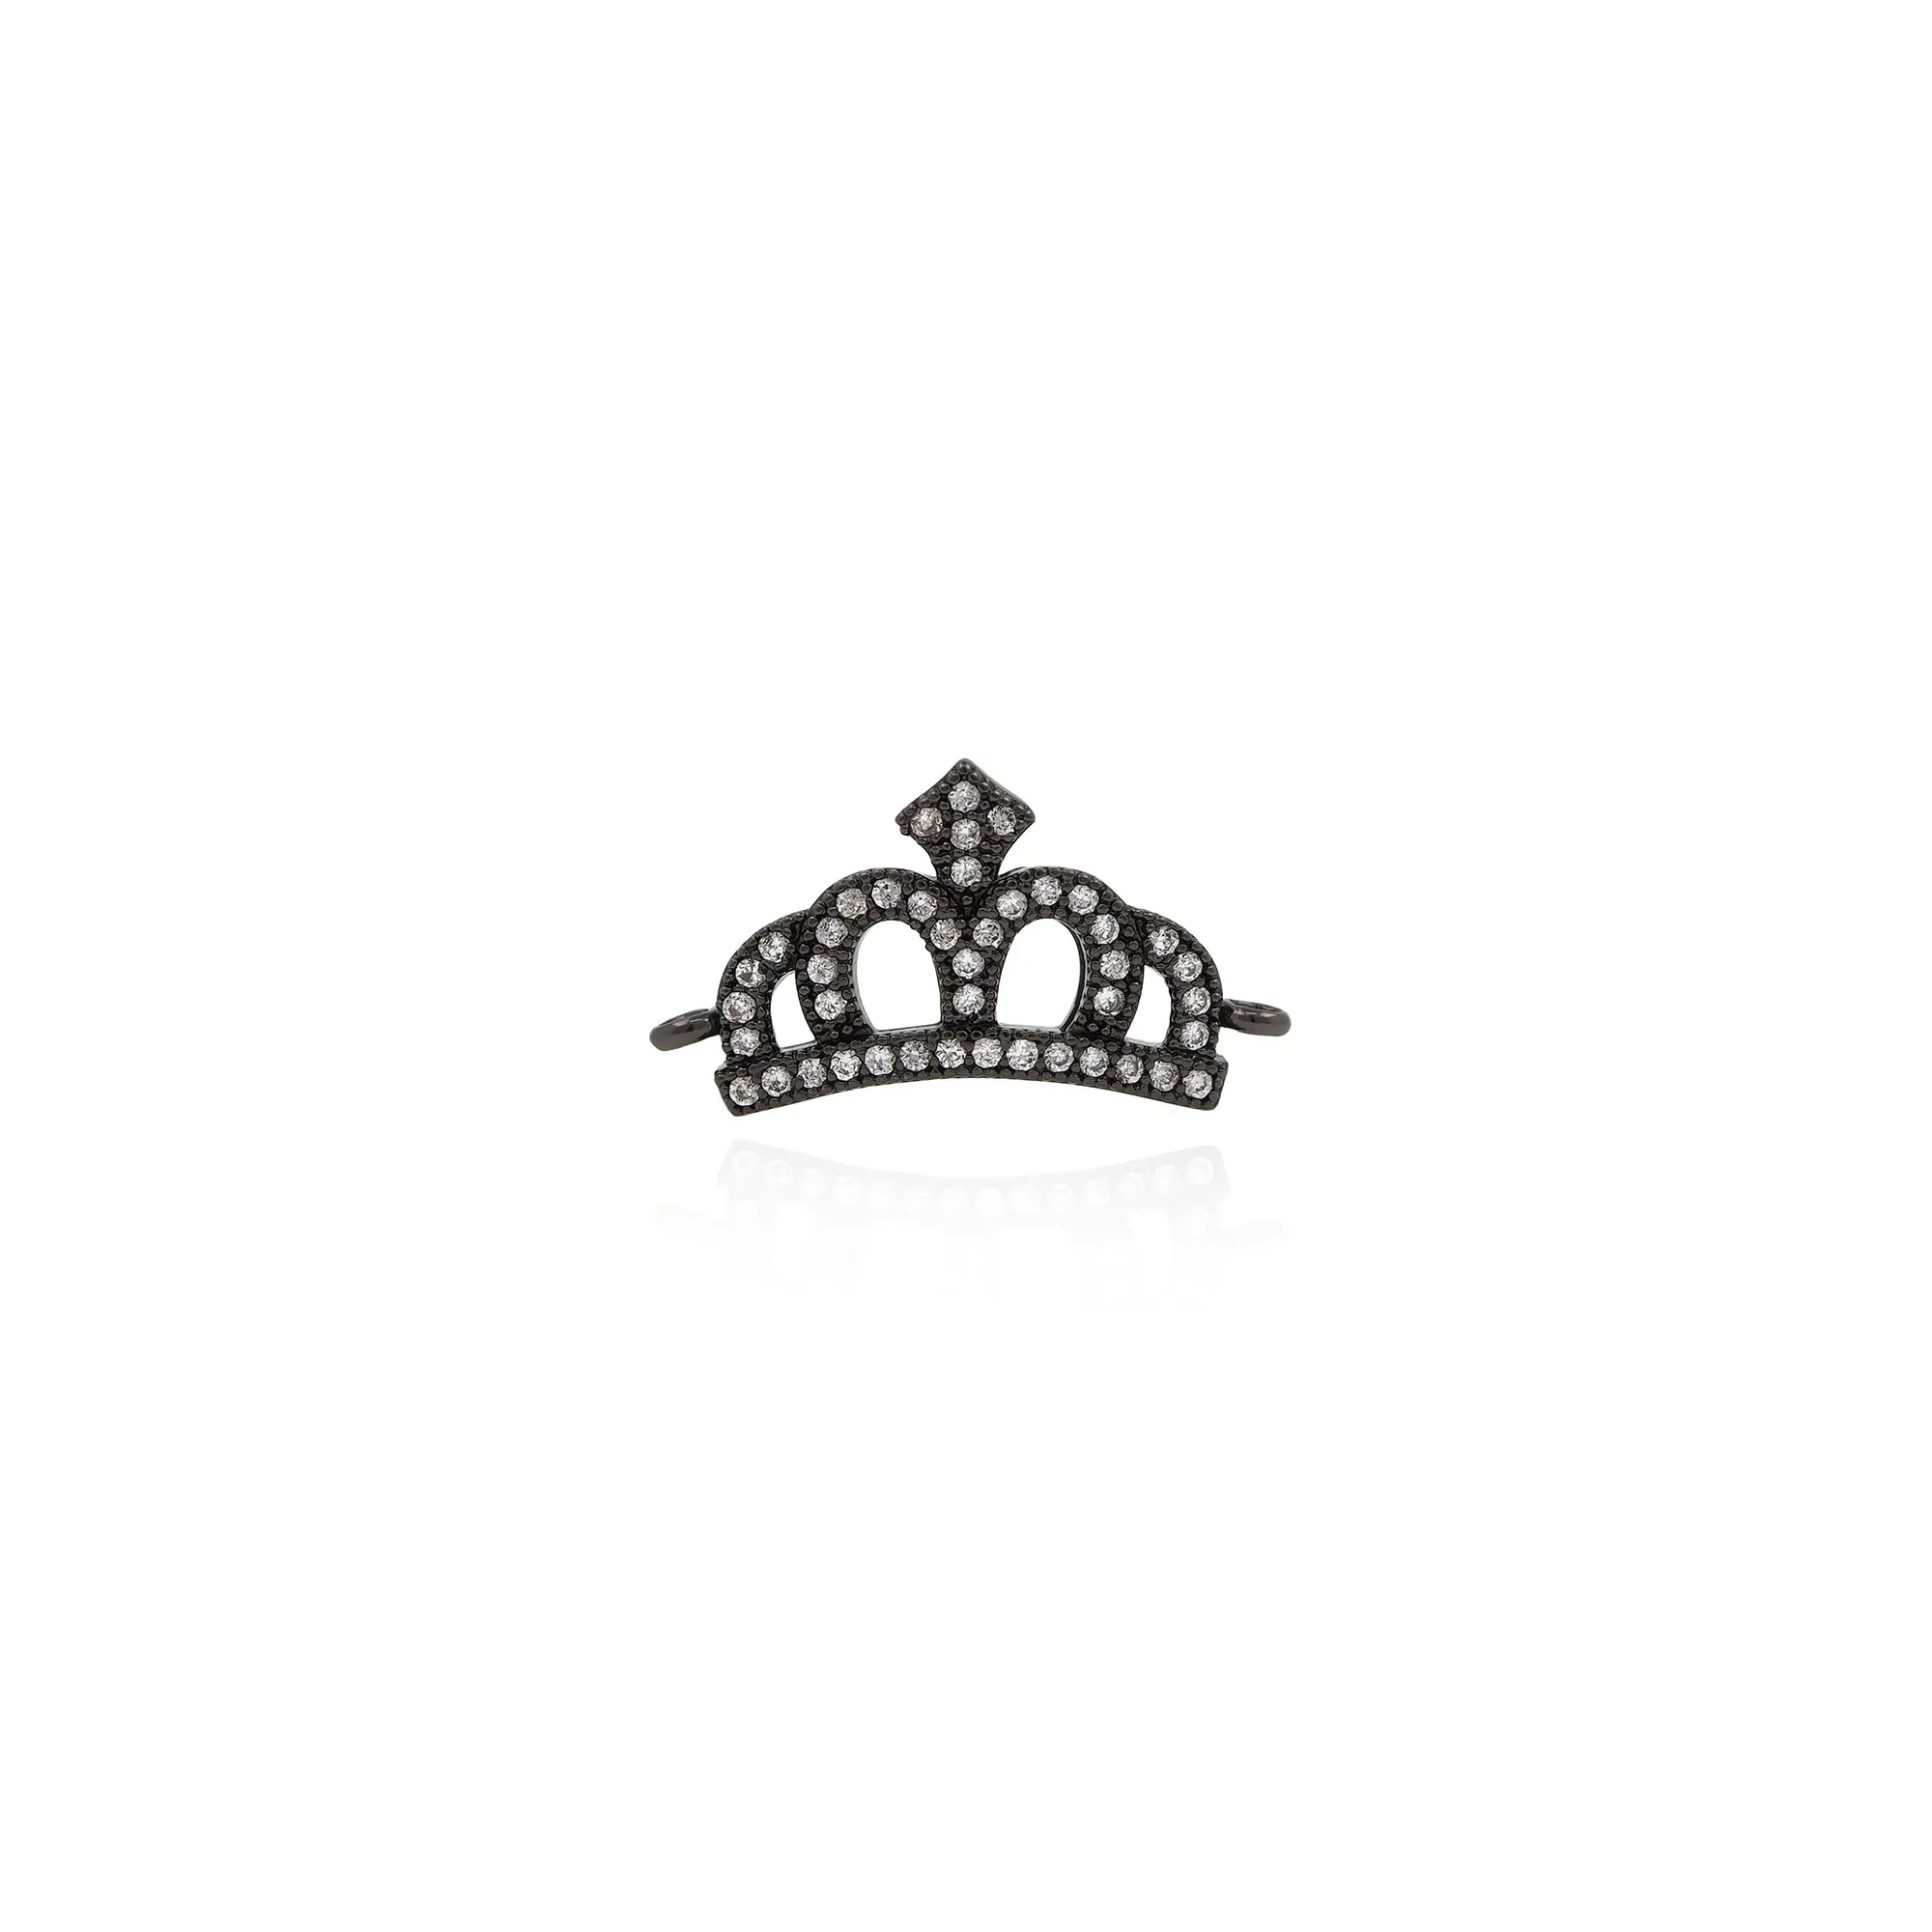 Moda Novi Kubni Cirkonij Crown Privjesak Dame Princeza Lanac Narukvica I Ogrlica Nakit Poklon Stranke Na Veliko Kralj Šarm 3